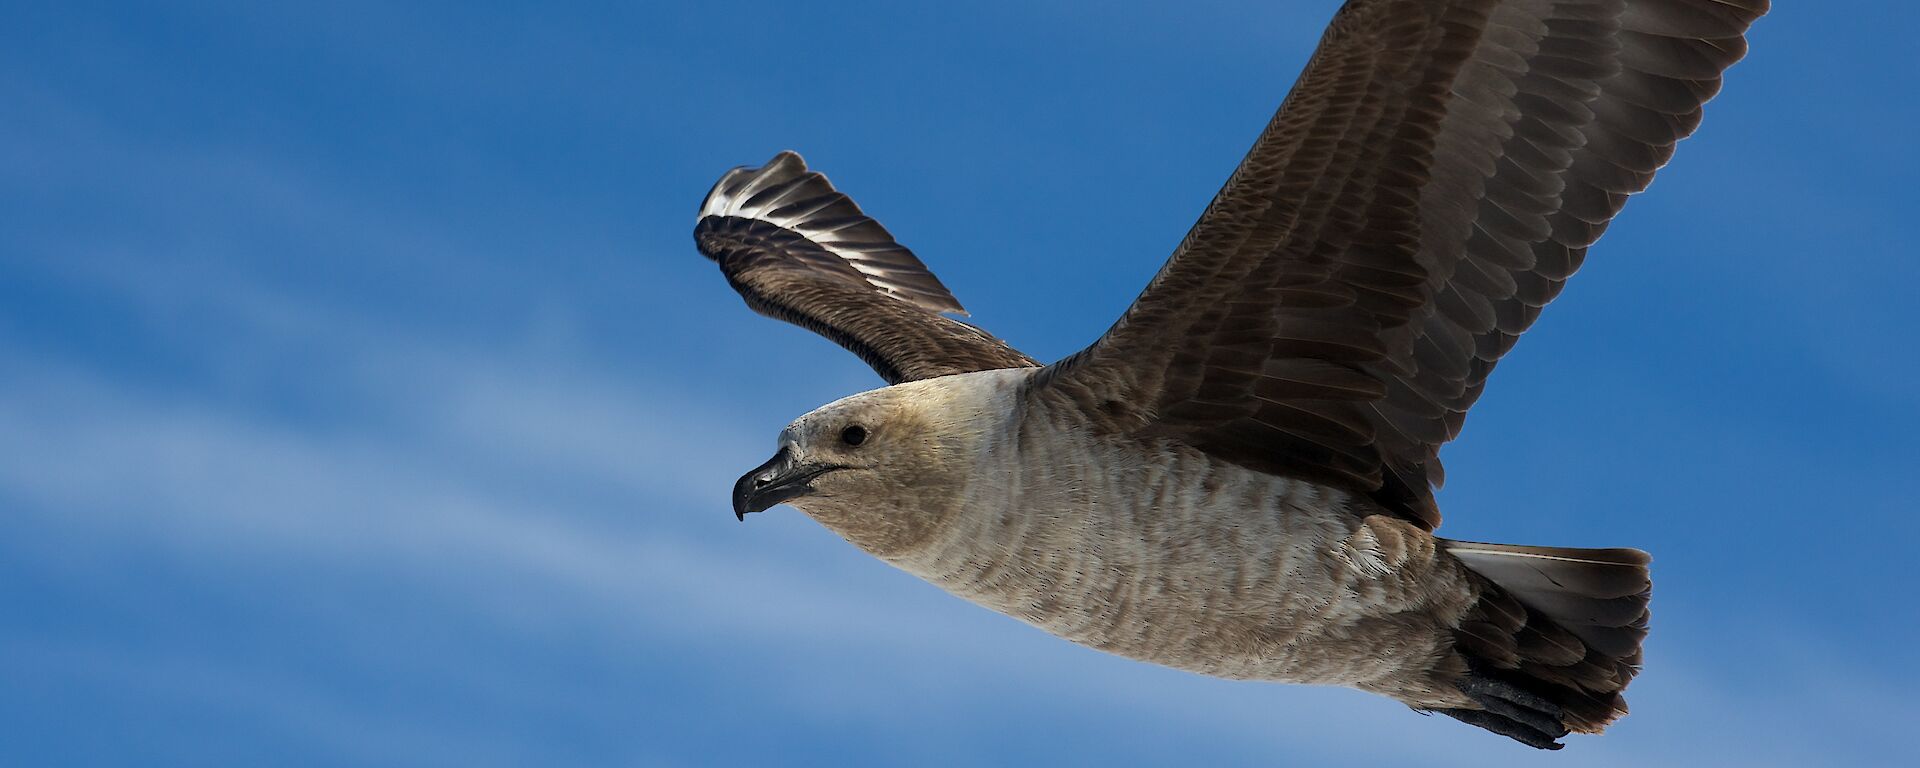 A south polar skua in flight.